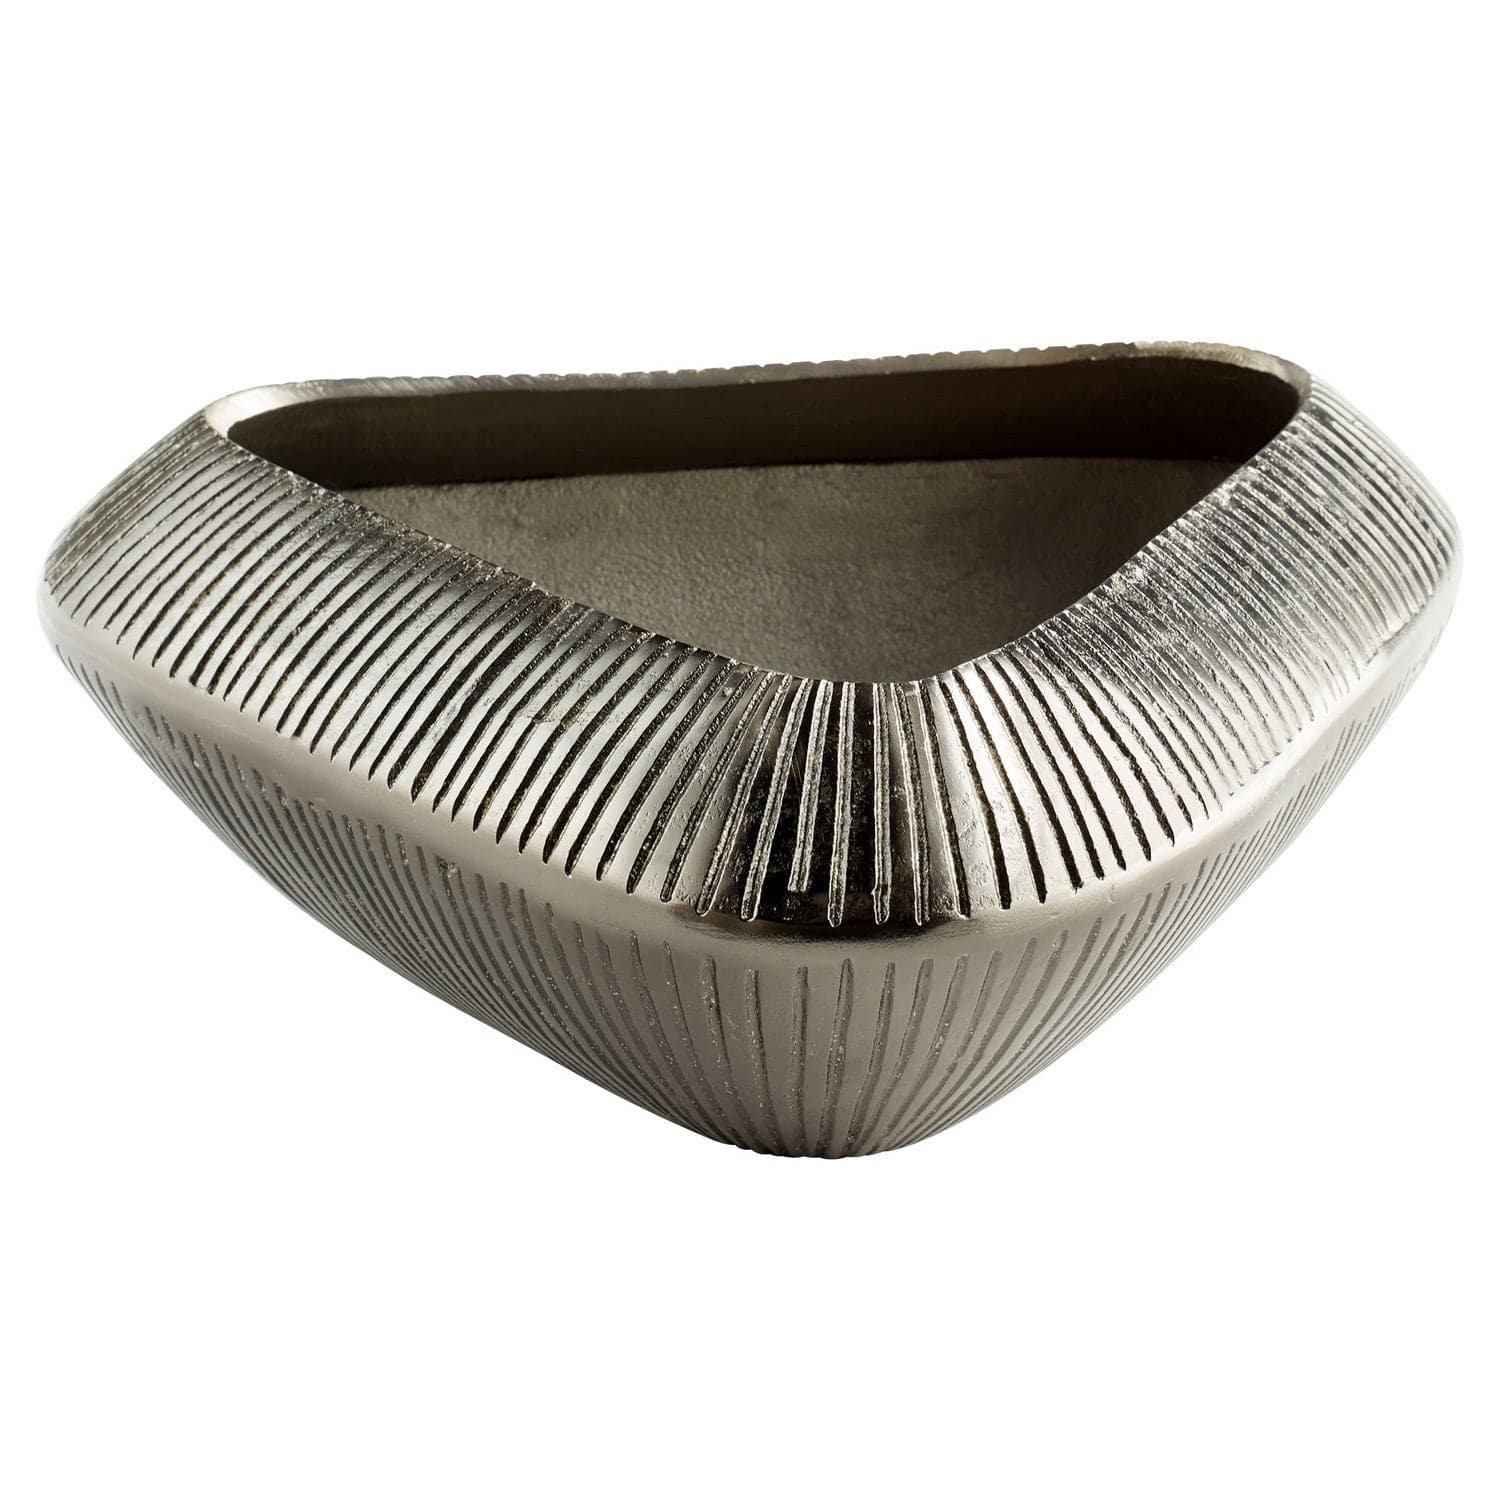 Cyan - 11526 - Bowl - Prism - Antique Bronze